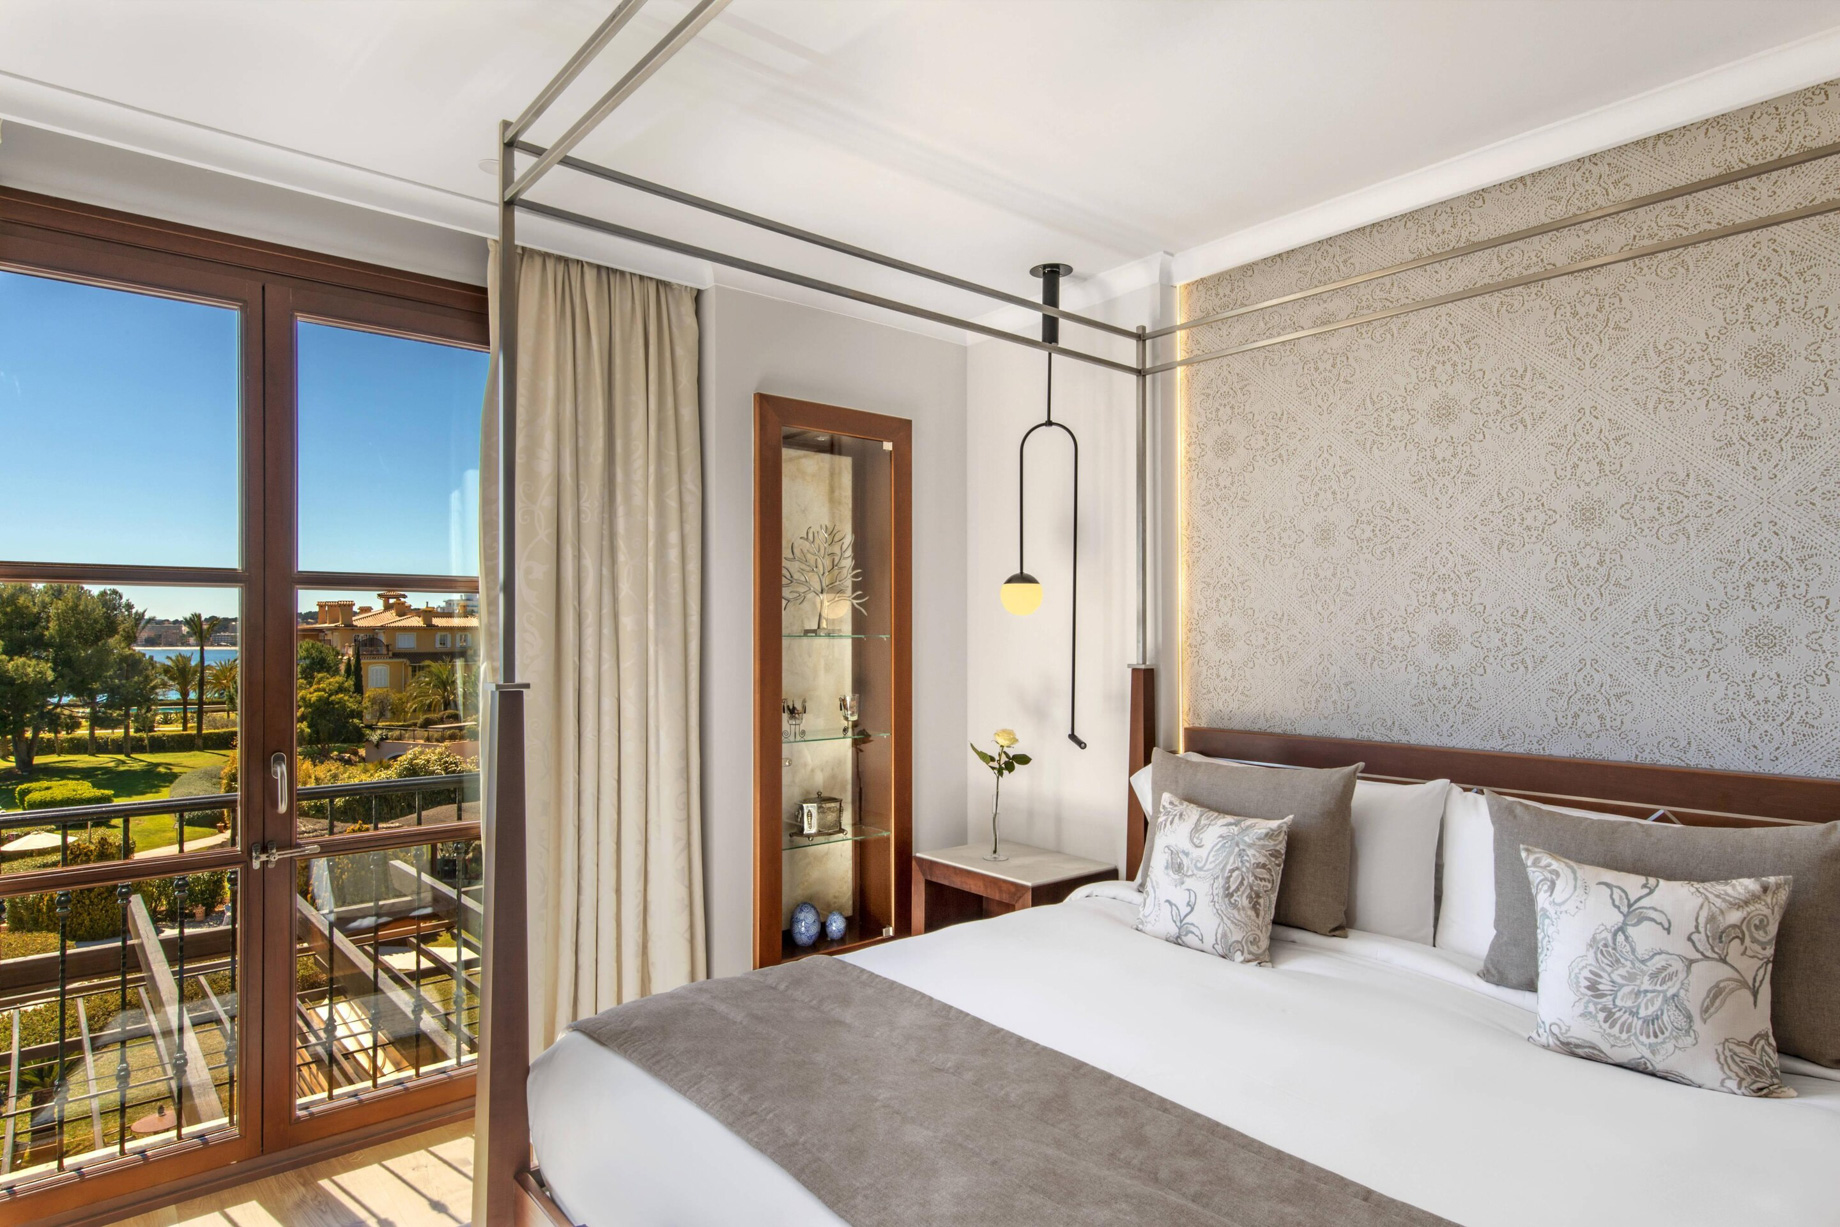 The St. Regis Mardavall Mallorca Resort – Palma de Mallorca, Spain – Mardavall Diamond Suite Bedroom View